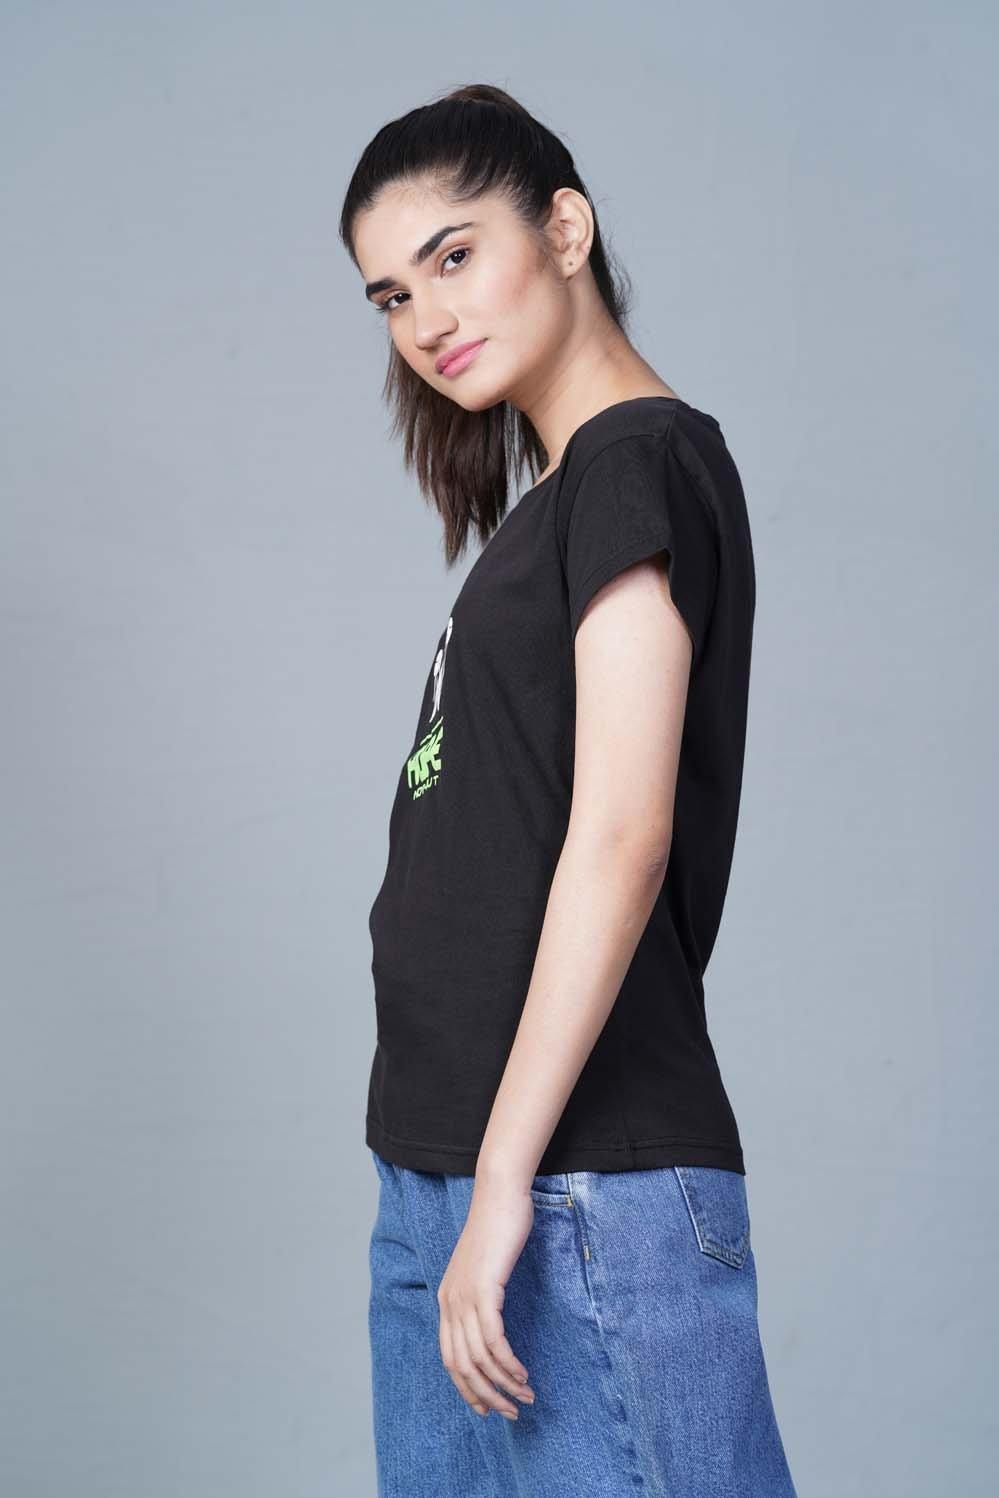 Hope Not Out by Shahid Afridi Women T-SHIRT Black T-Shirt HWKTF20030